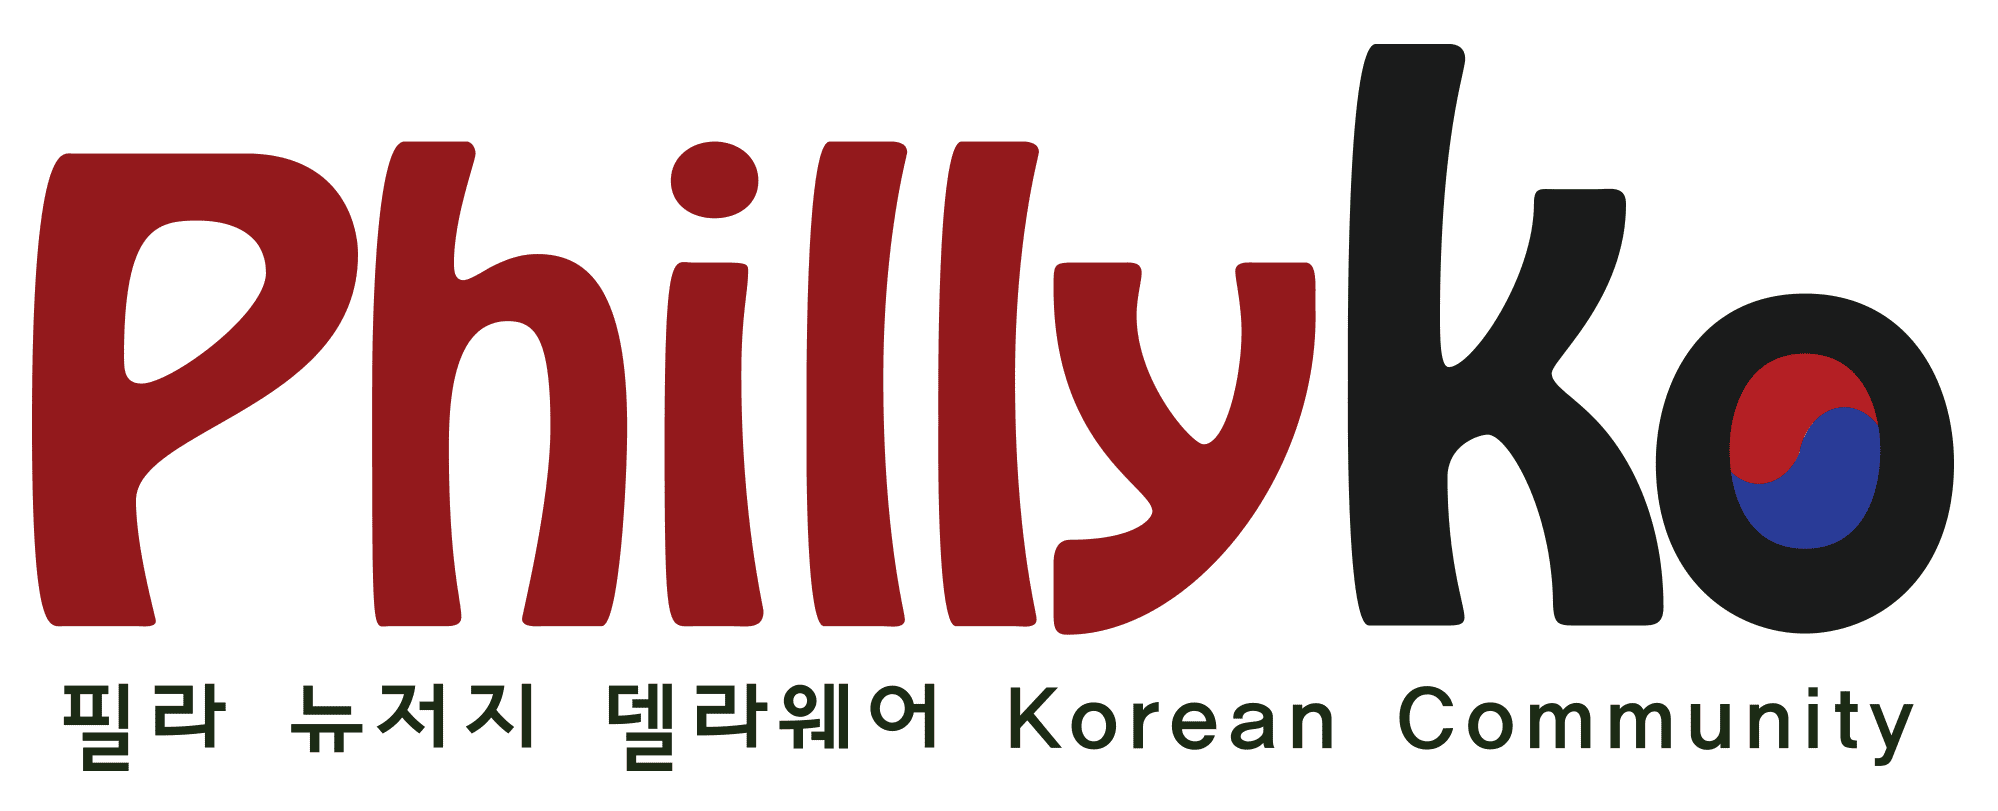 phillyko logo